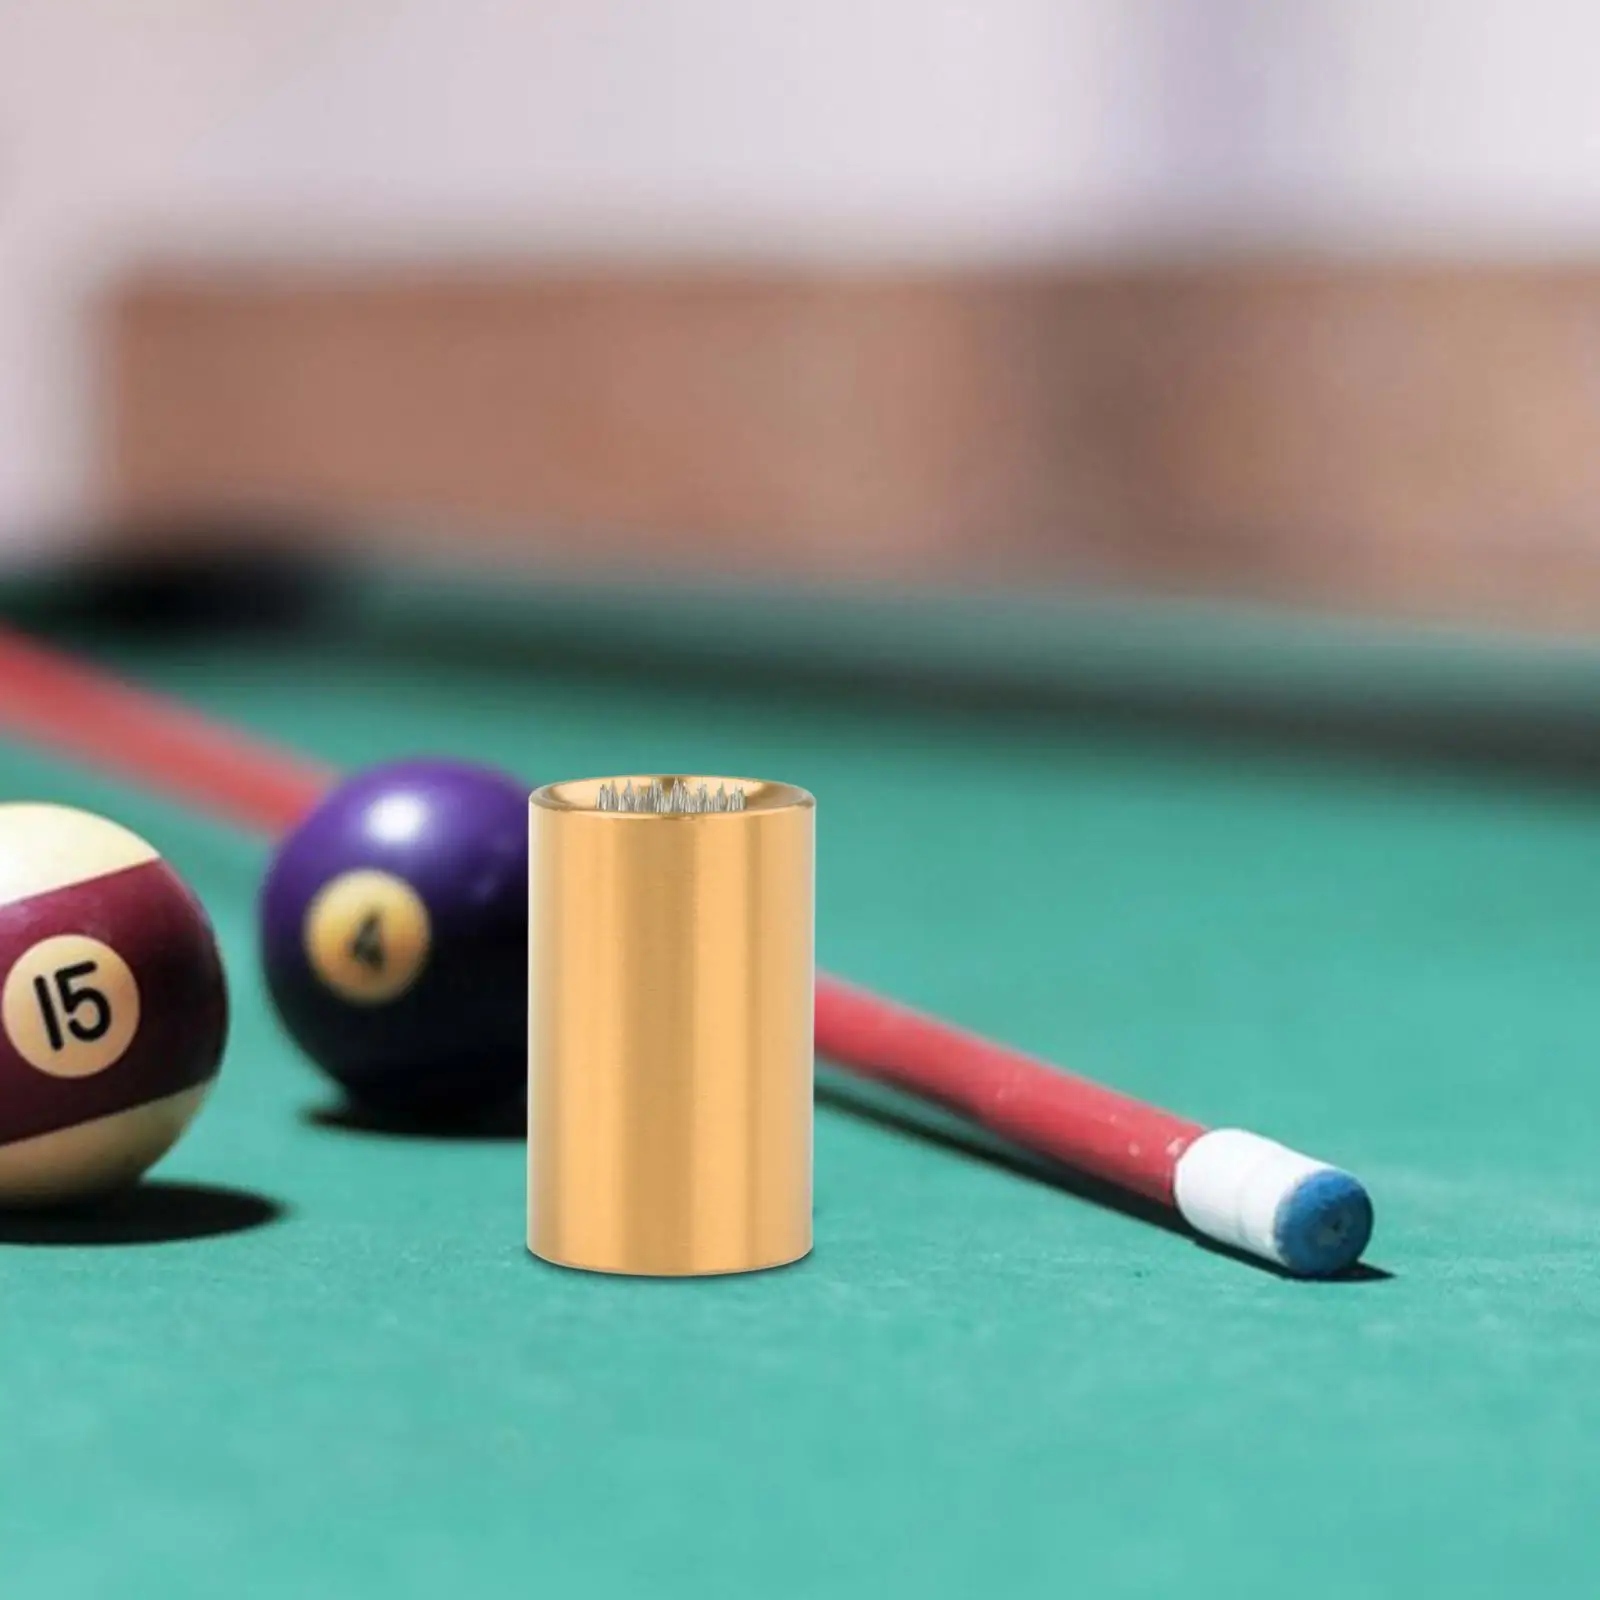 Snooker Cue Tip Shaper Aerator 2 in 1 Pool Cue Maintenance Tools Portable Billiard Pool Cue Tip Tools Billiards Cue Accessories